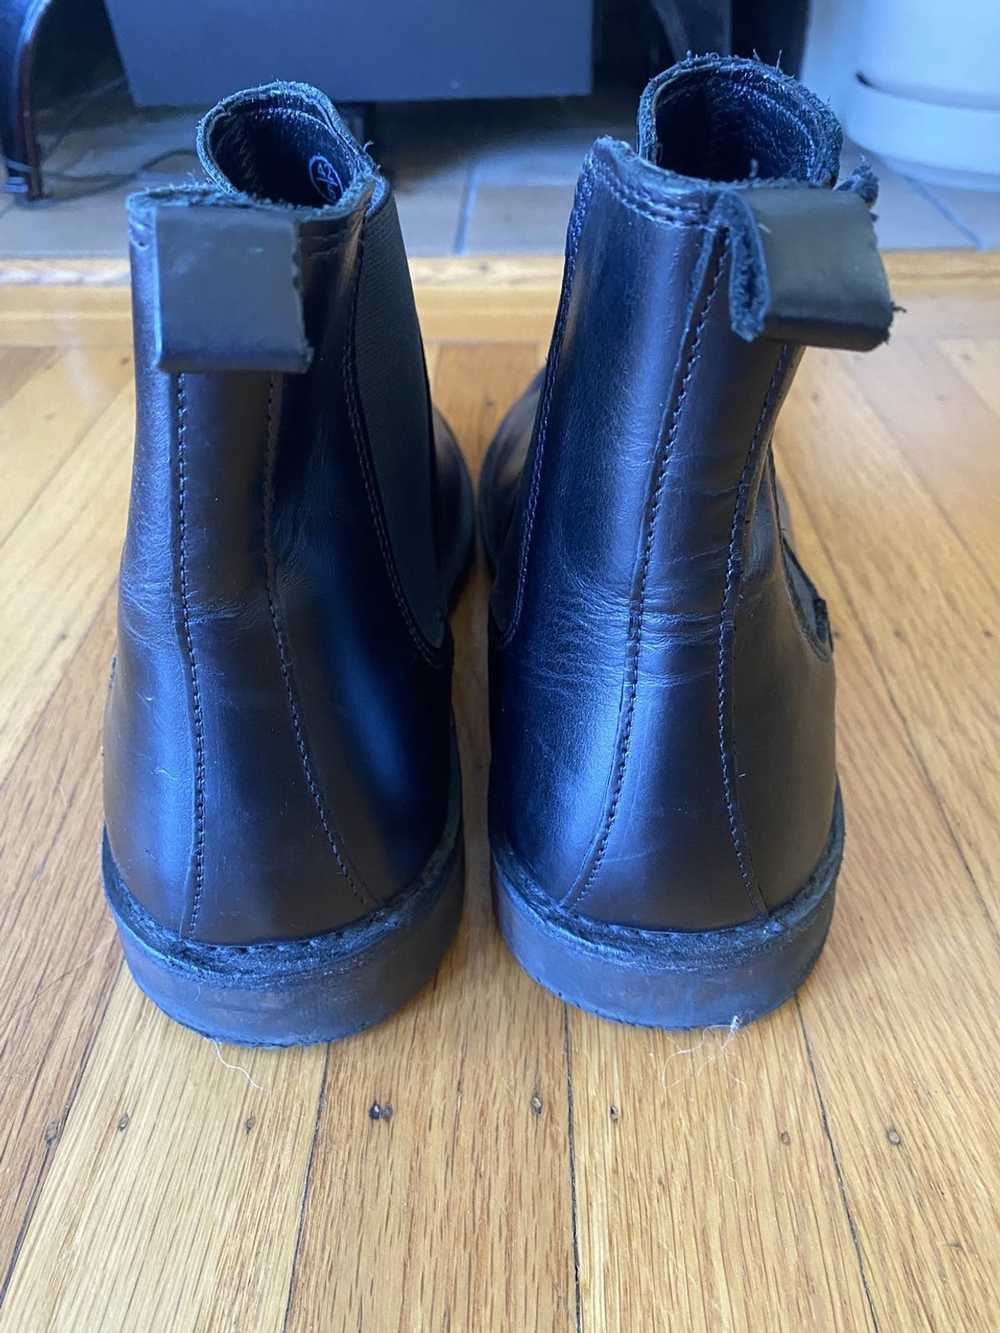 Samsoe & Samsoe Samesoe Black Leather Chelsea Boot - image 2